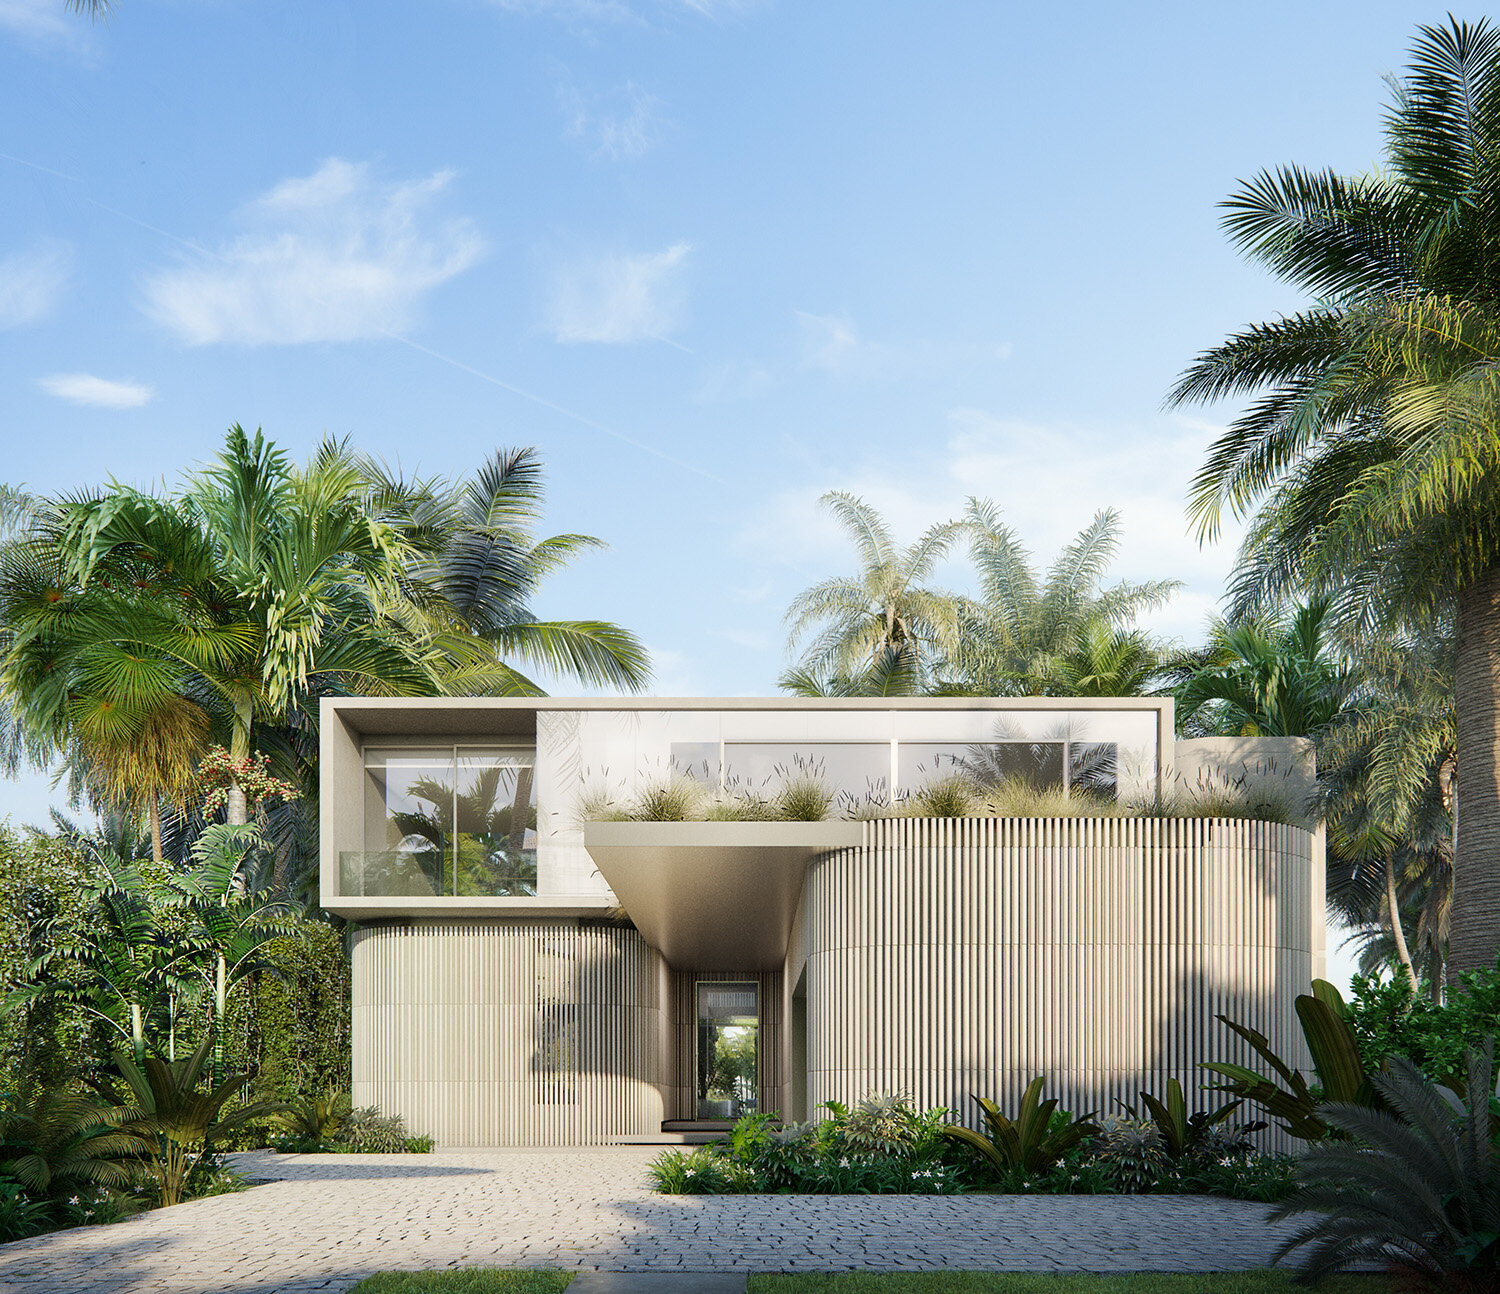  KoDA Sunset Villa Miami Beach Residence - 3D Rendering by Azeez Bakare Studios  